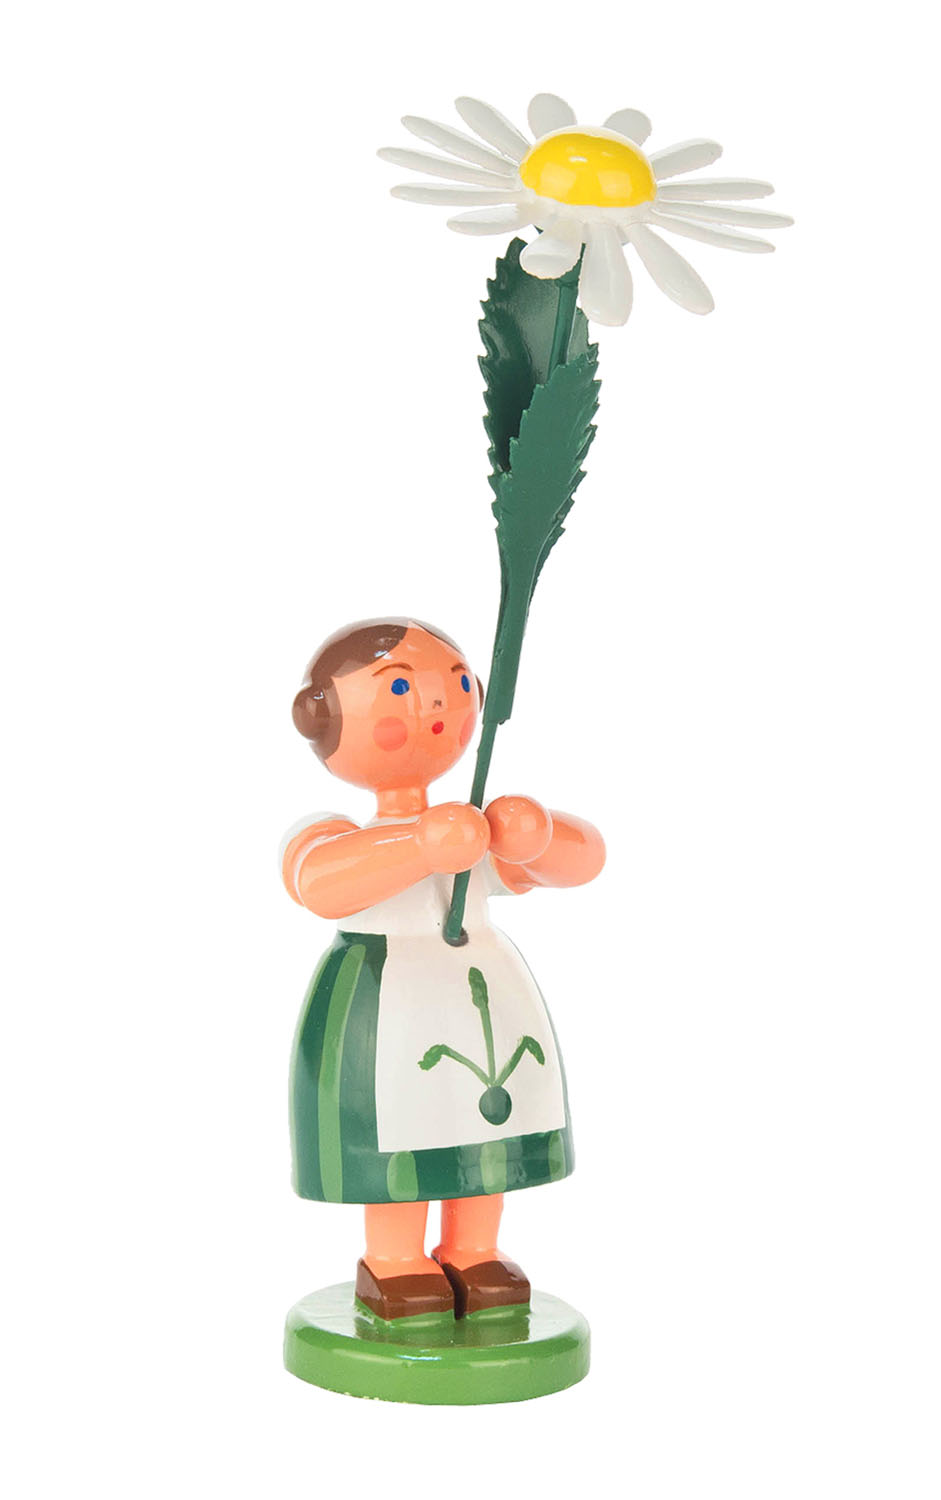 Dregeno Easter Figurine - Green Flower Girl - 4.5"H x 1.25"W x 1.25"D